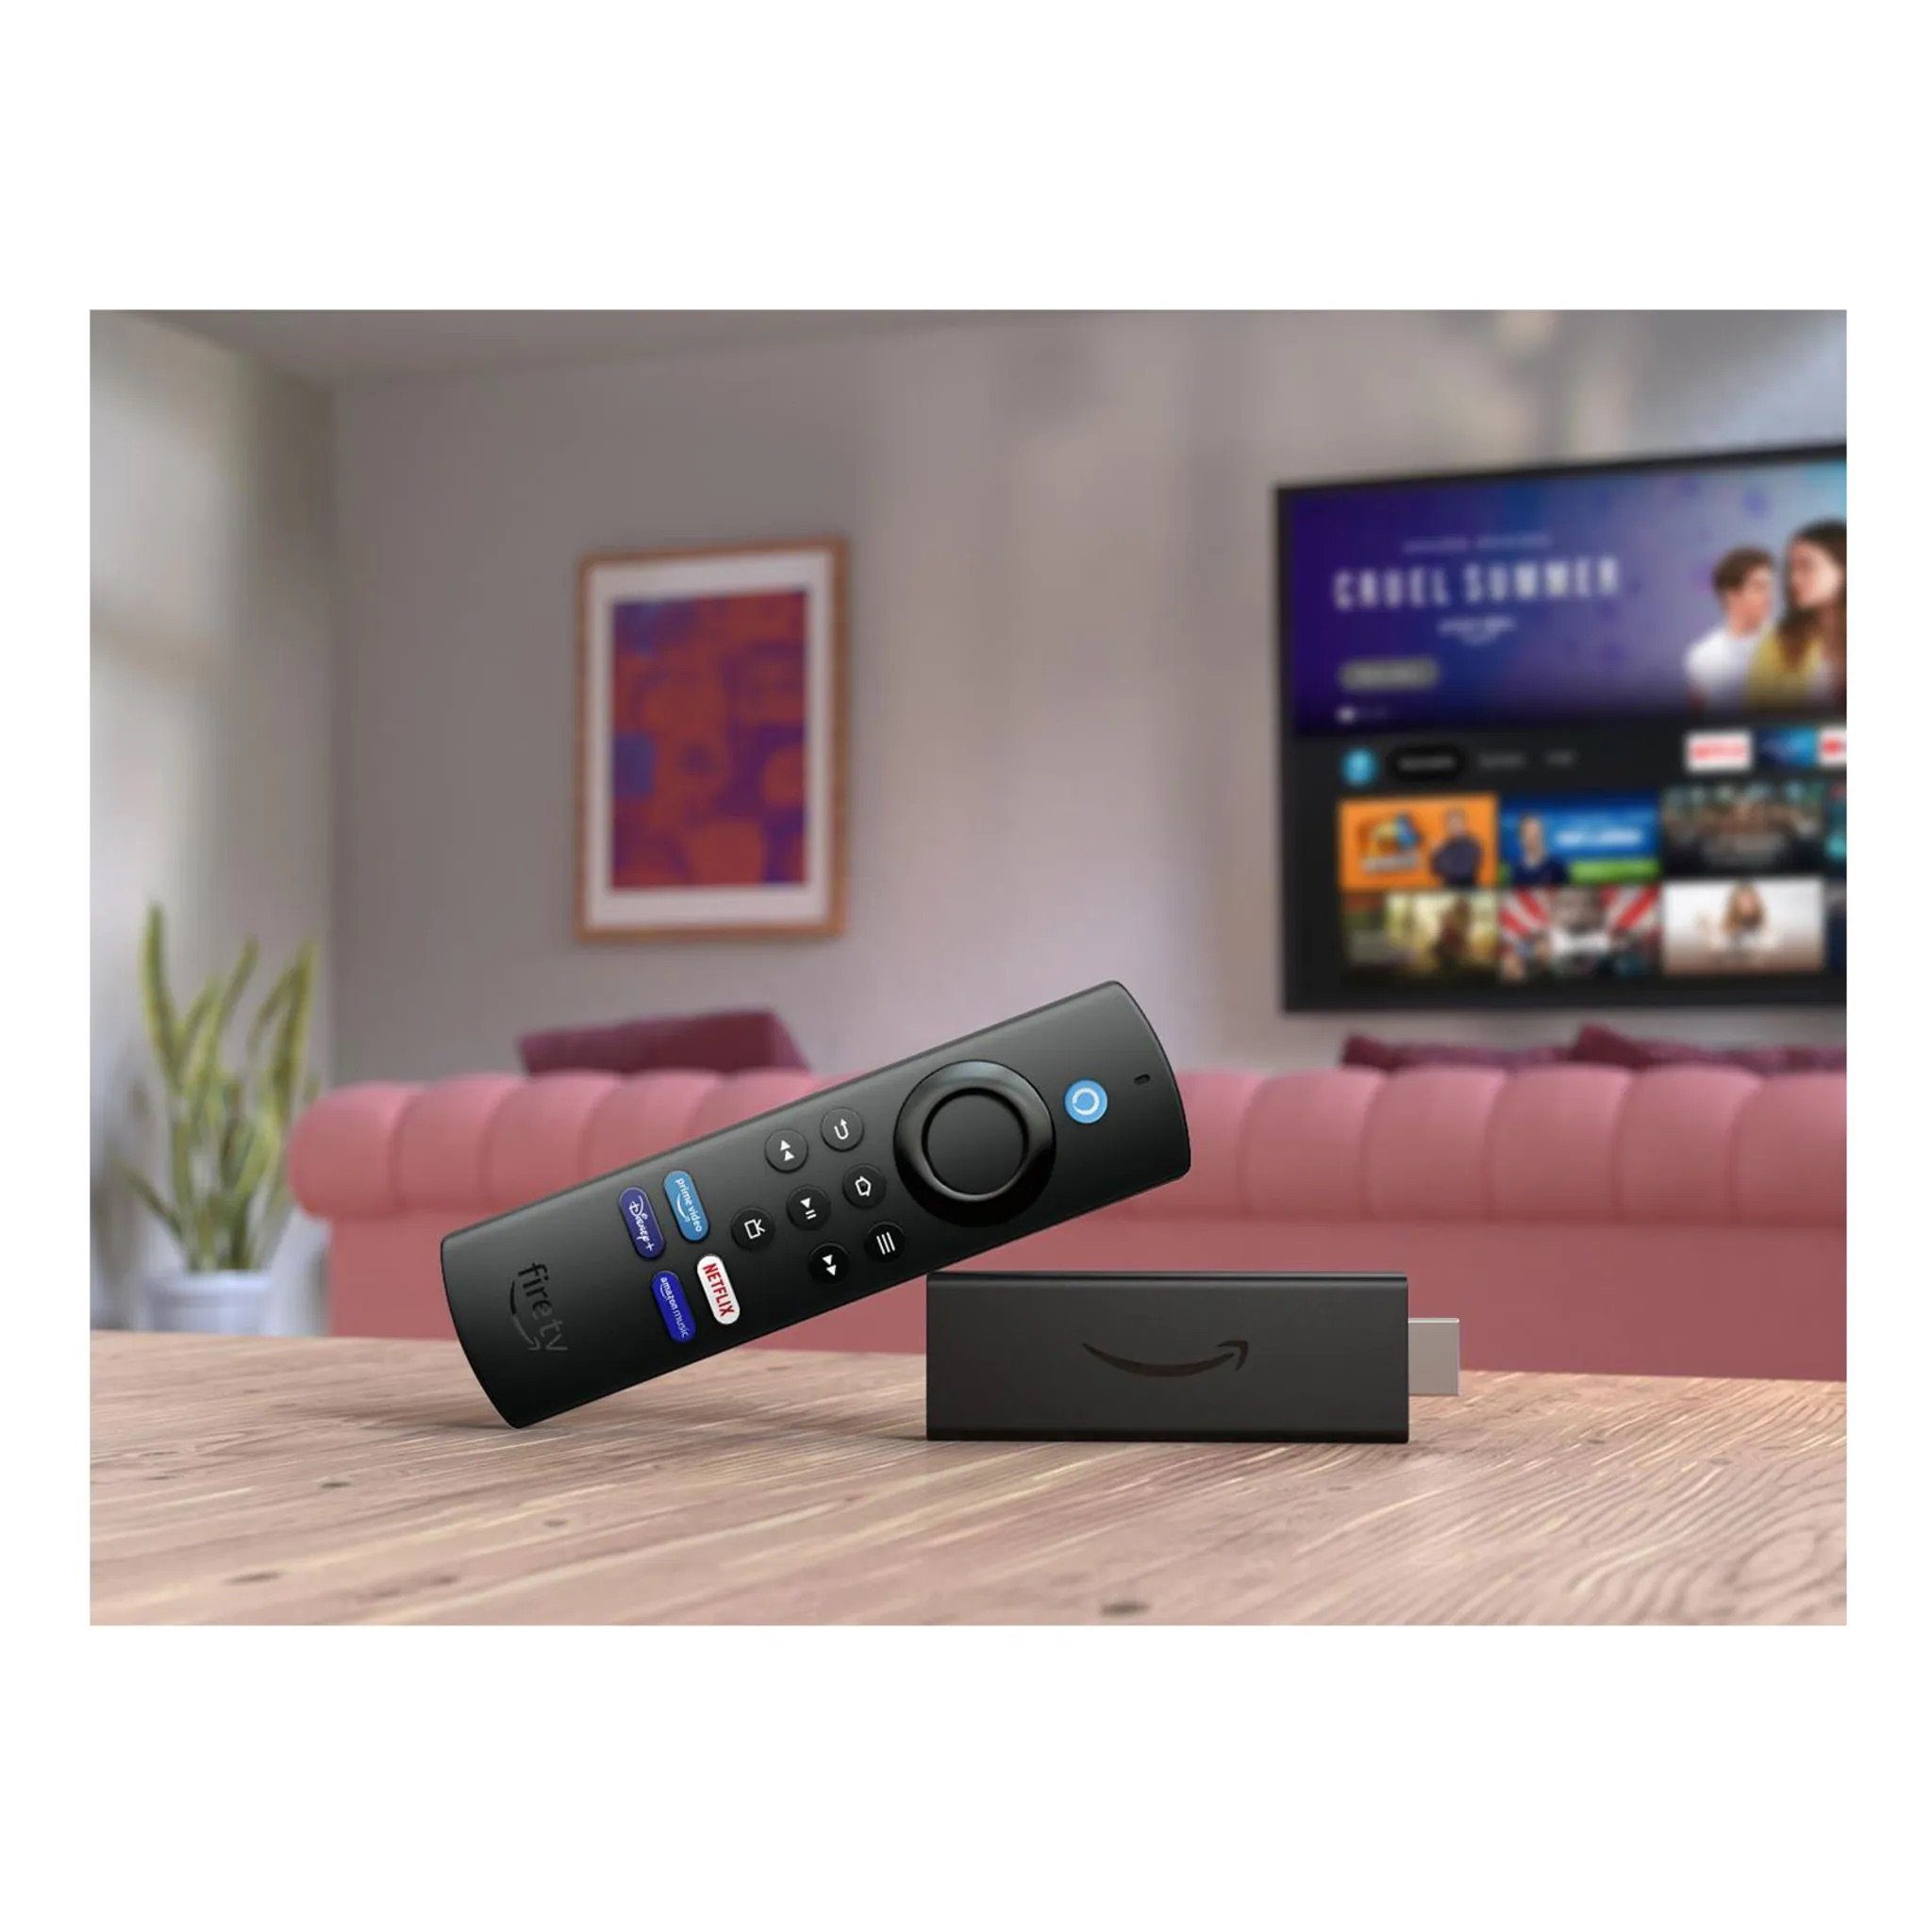 Stick mit« Amazon Amazon Stick Streaming-Box Streaming Smart-Home-Fernbedienung LITE TV Fire »Amazon